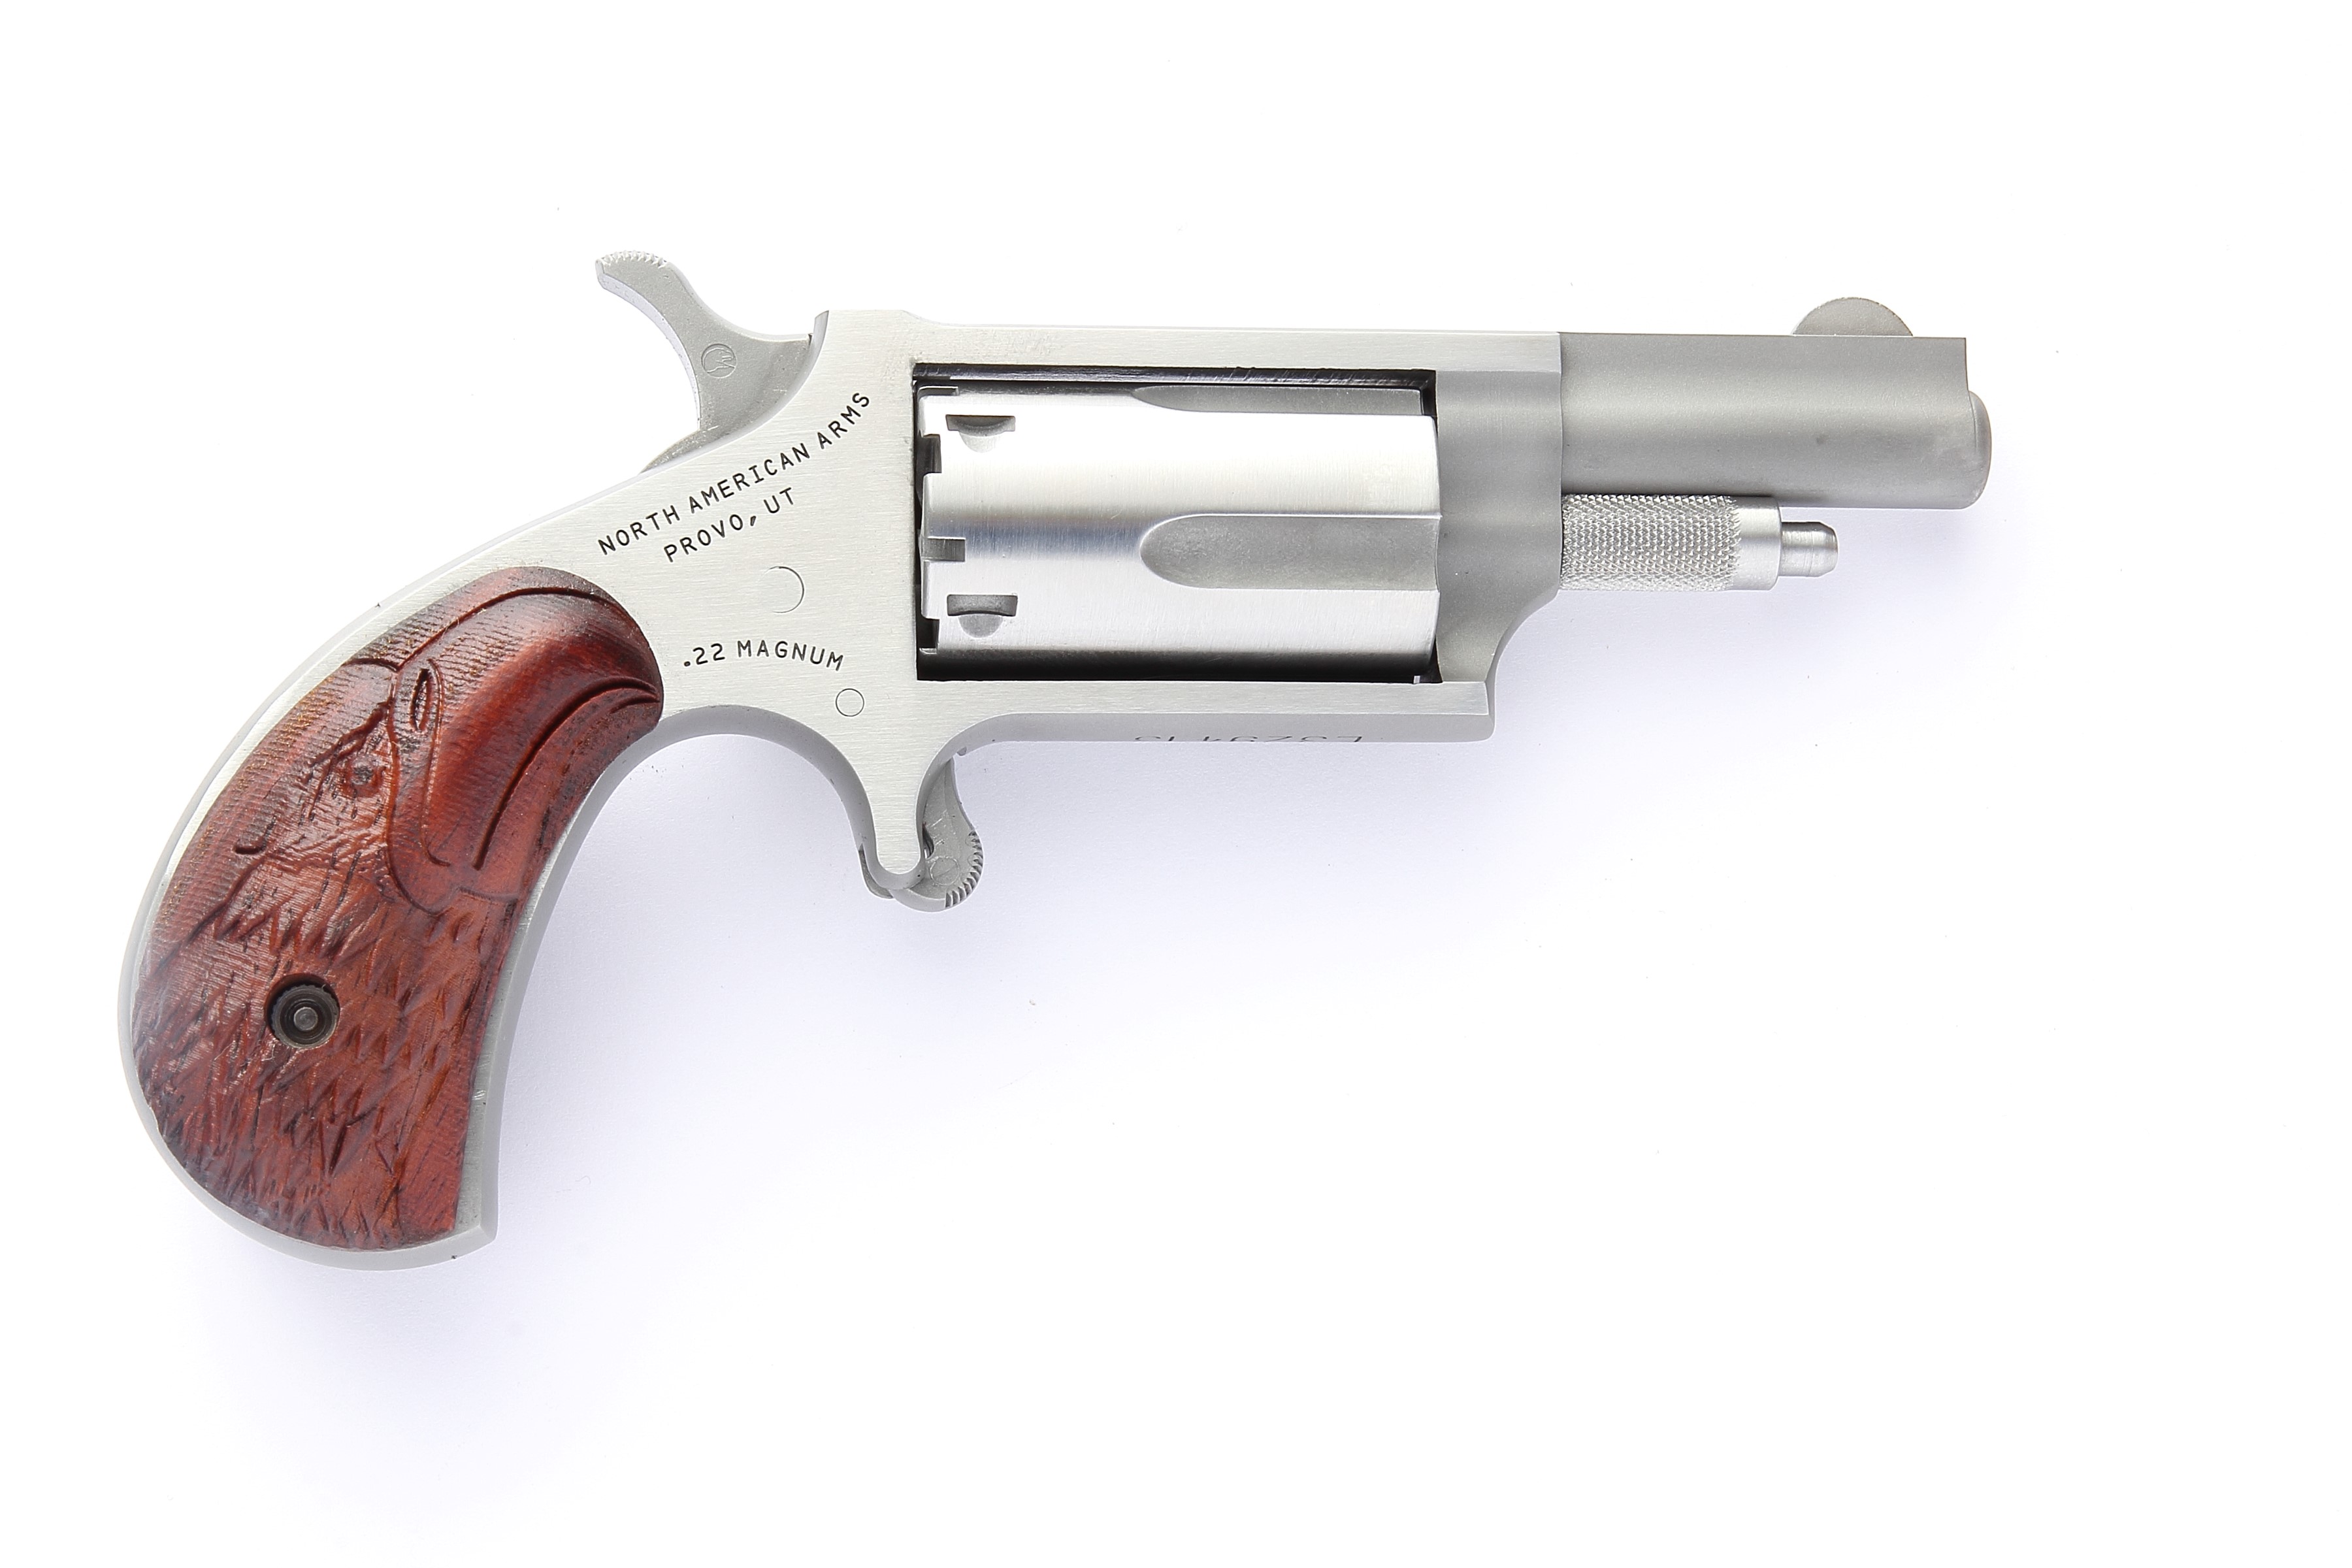 North American Arms Mini-Revolver Convertible 22 LR | 22 Magnum